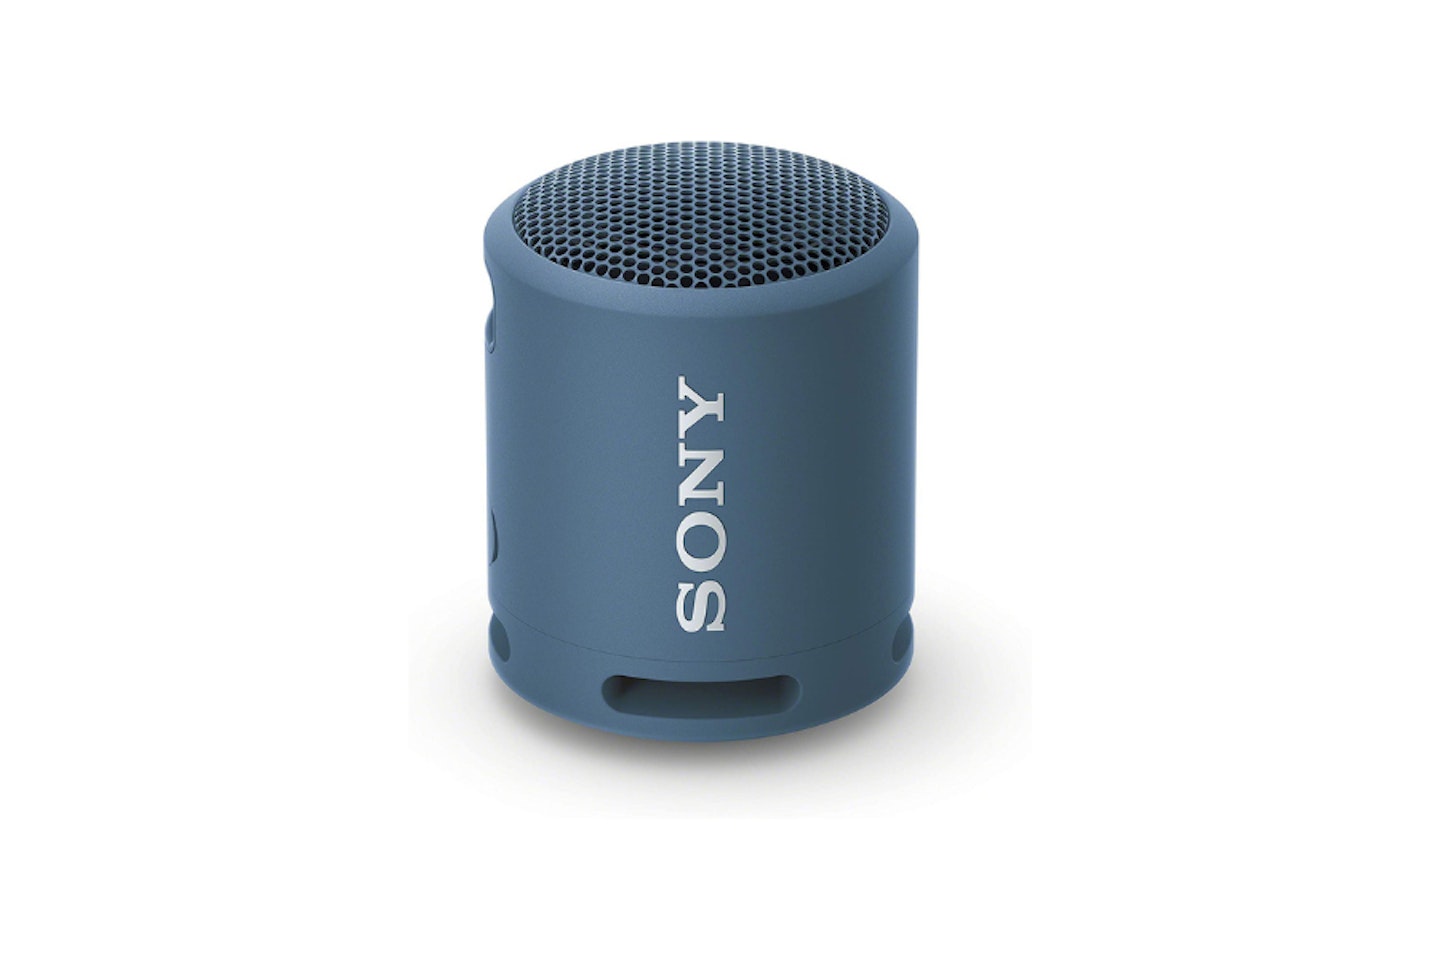 Sony SRS-XB13 speaker